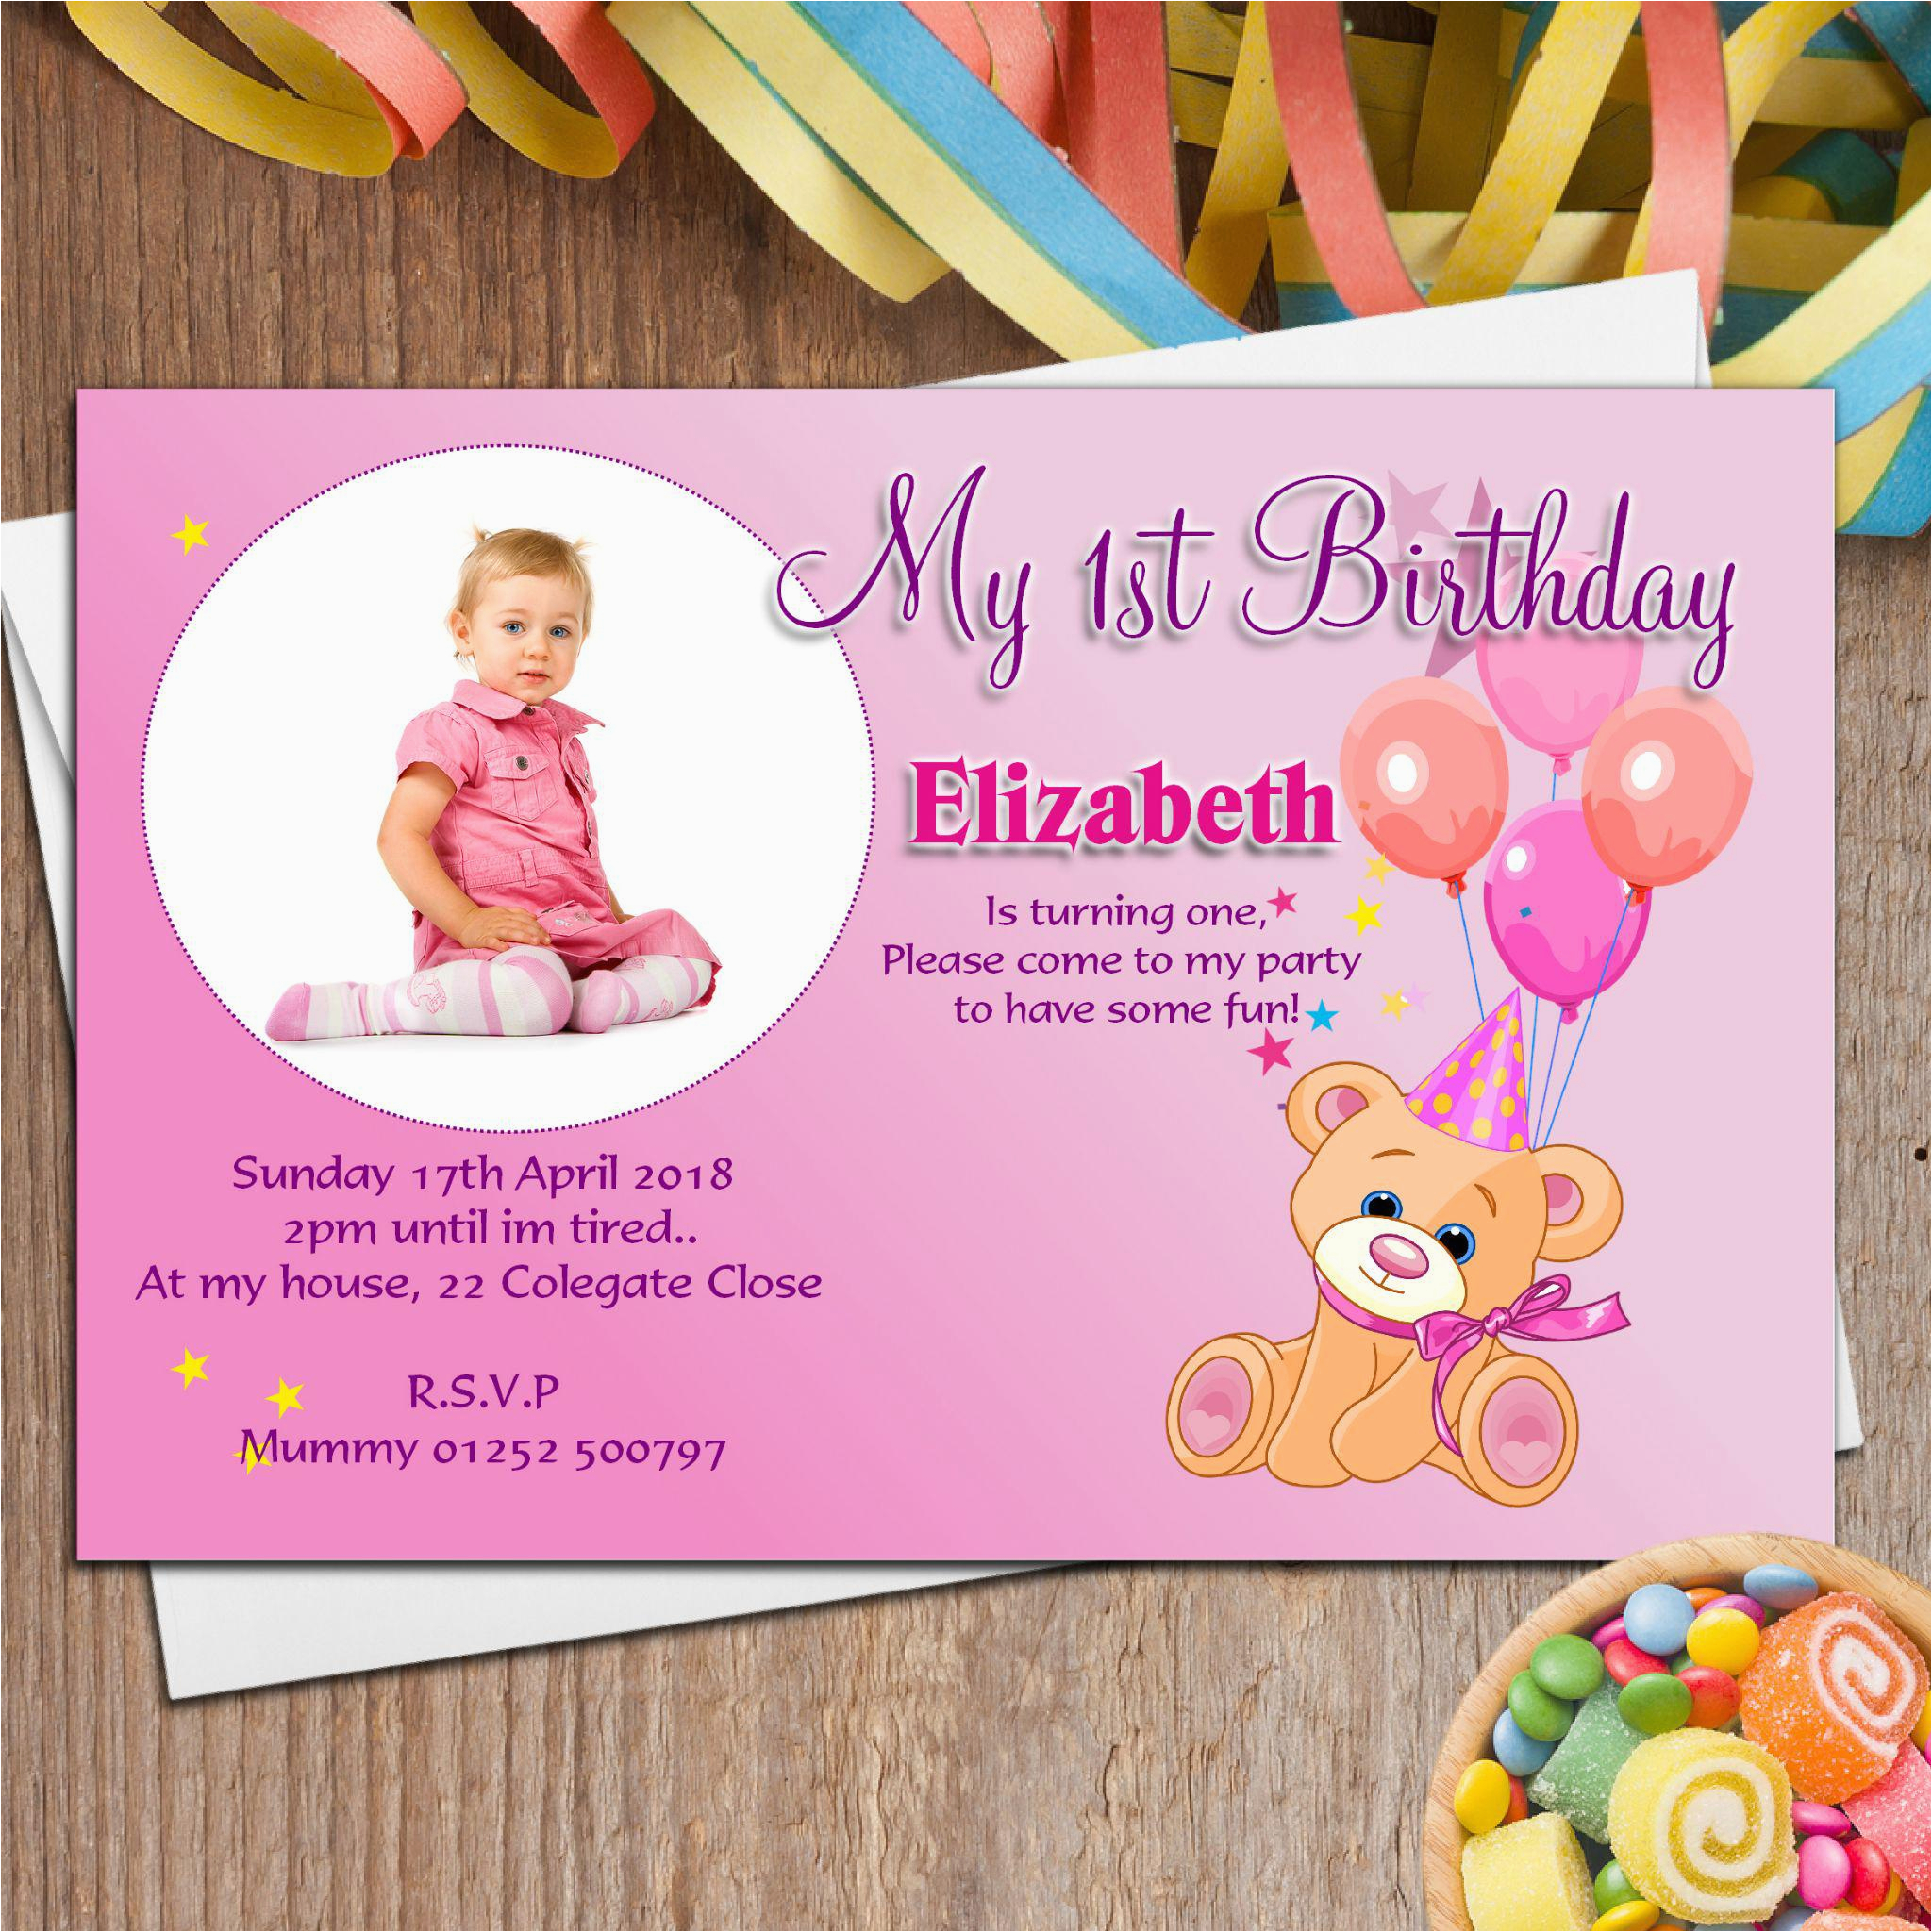 invitations-cards-for-birthday-parties-birthdaybuzz